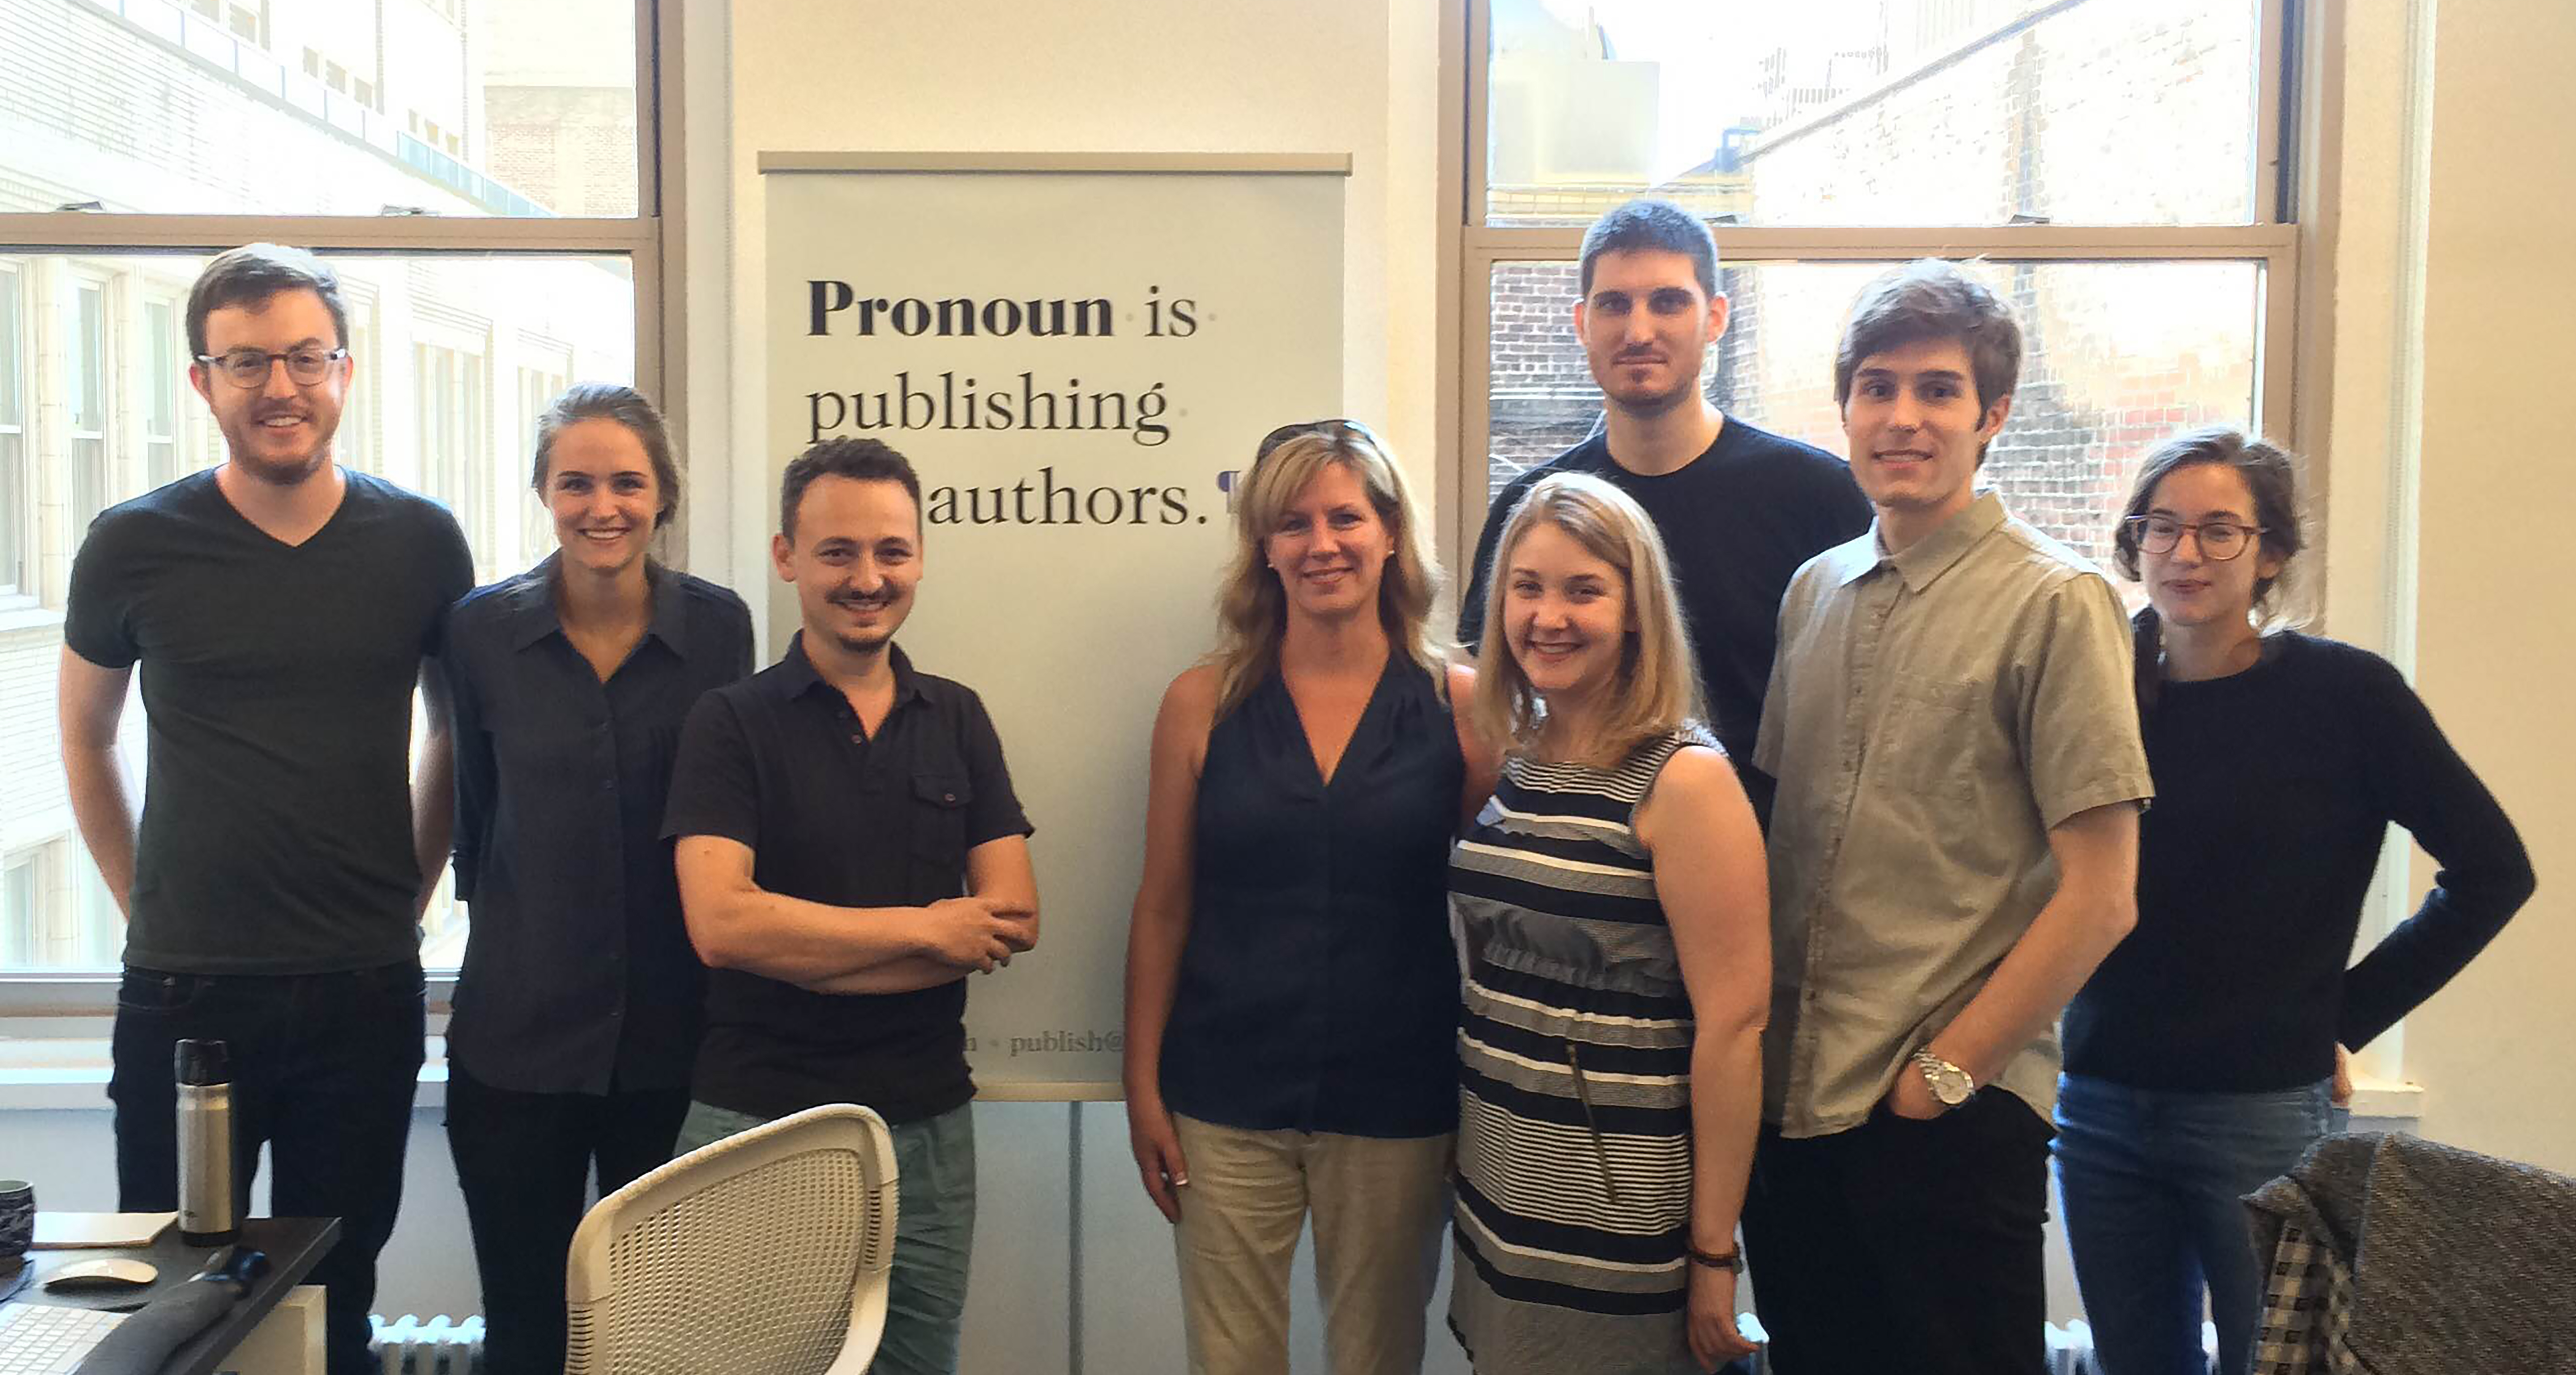 S.M. McEachern with the Pronoun Team, NYC, July 2015